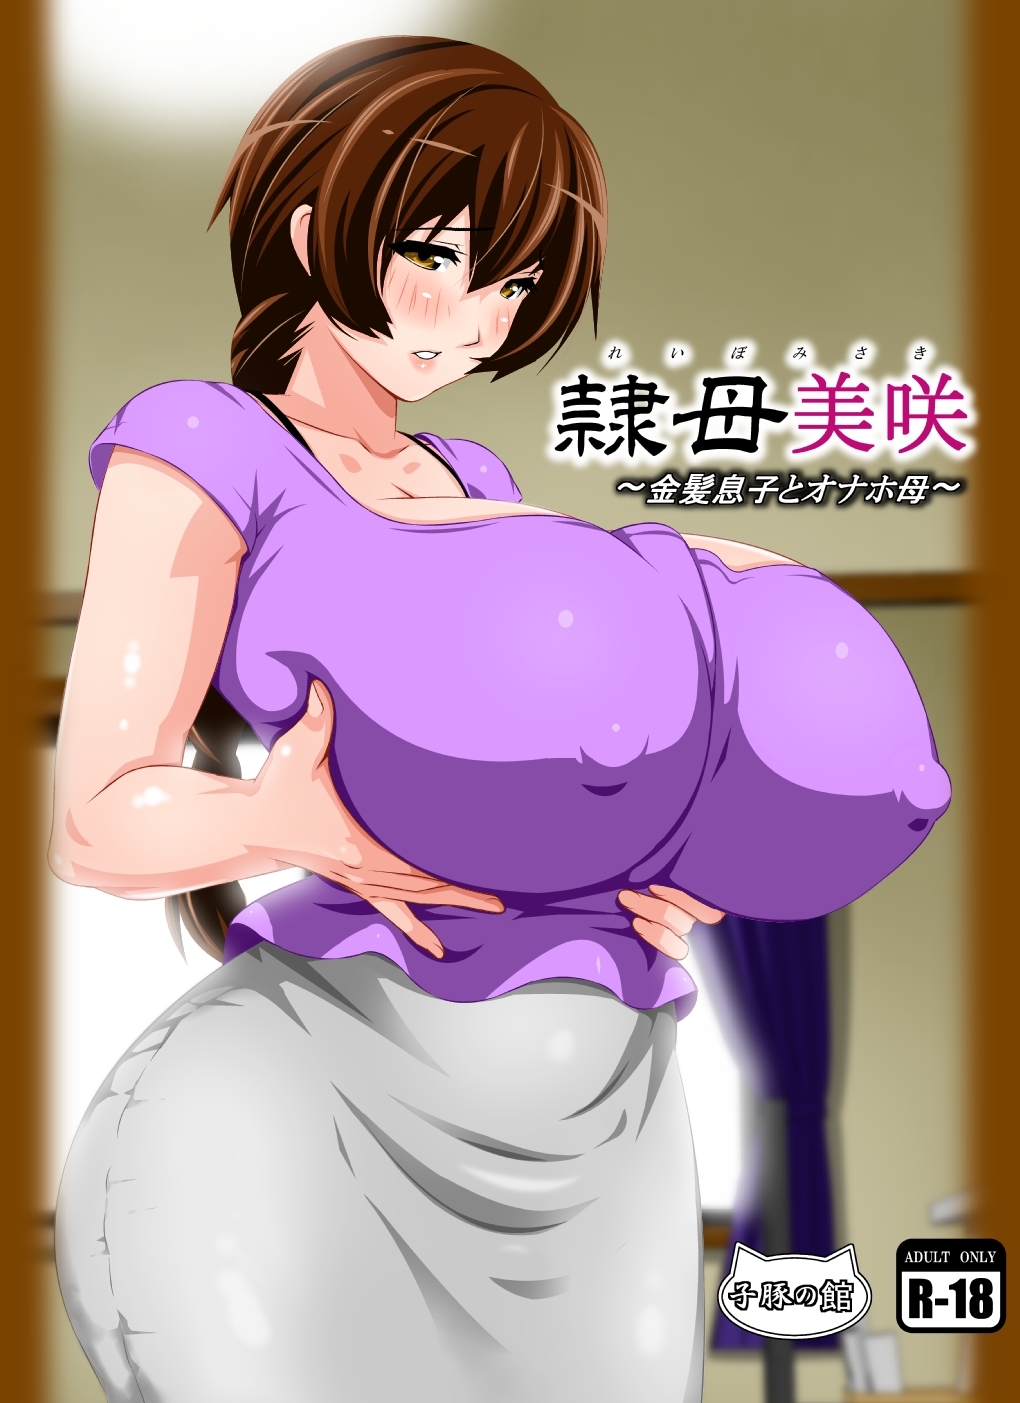 boobs - Hentai Manga and Doujinshi Collection